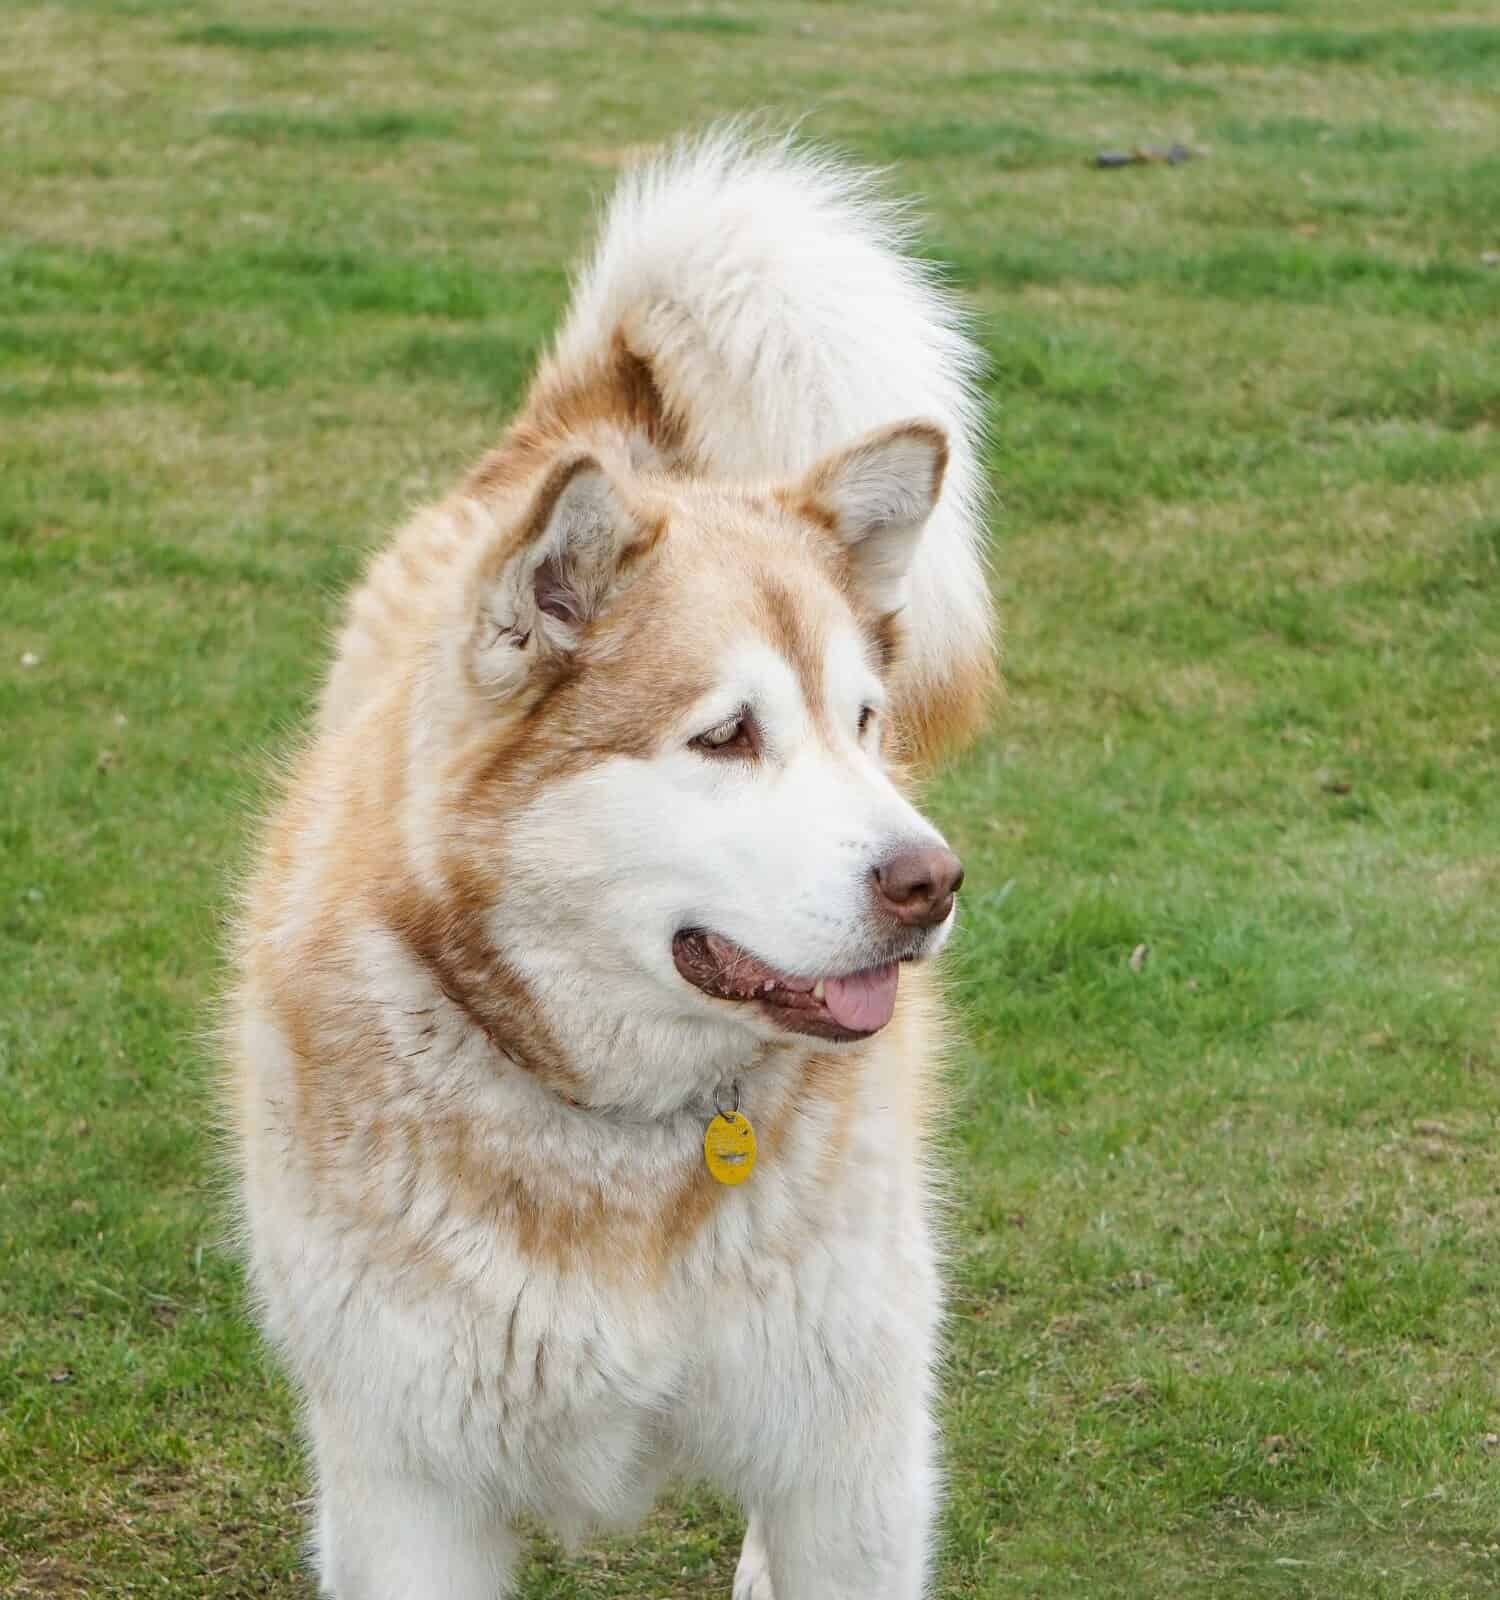 Red, ginger alaskan malamute standing dog on green grass